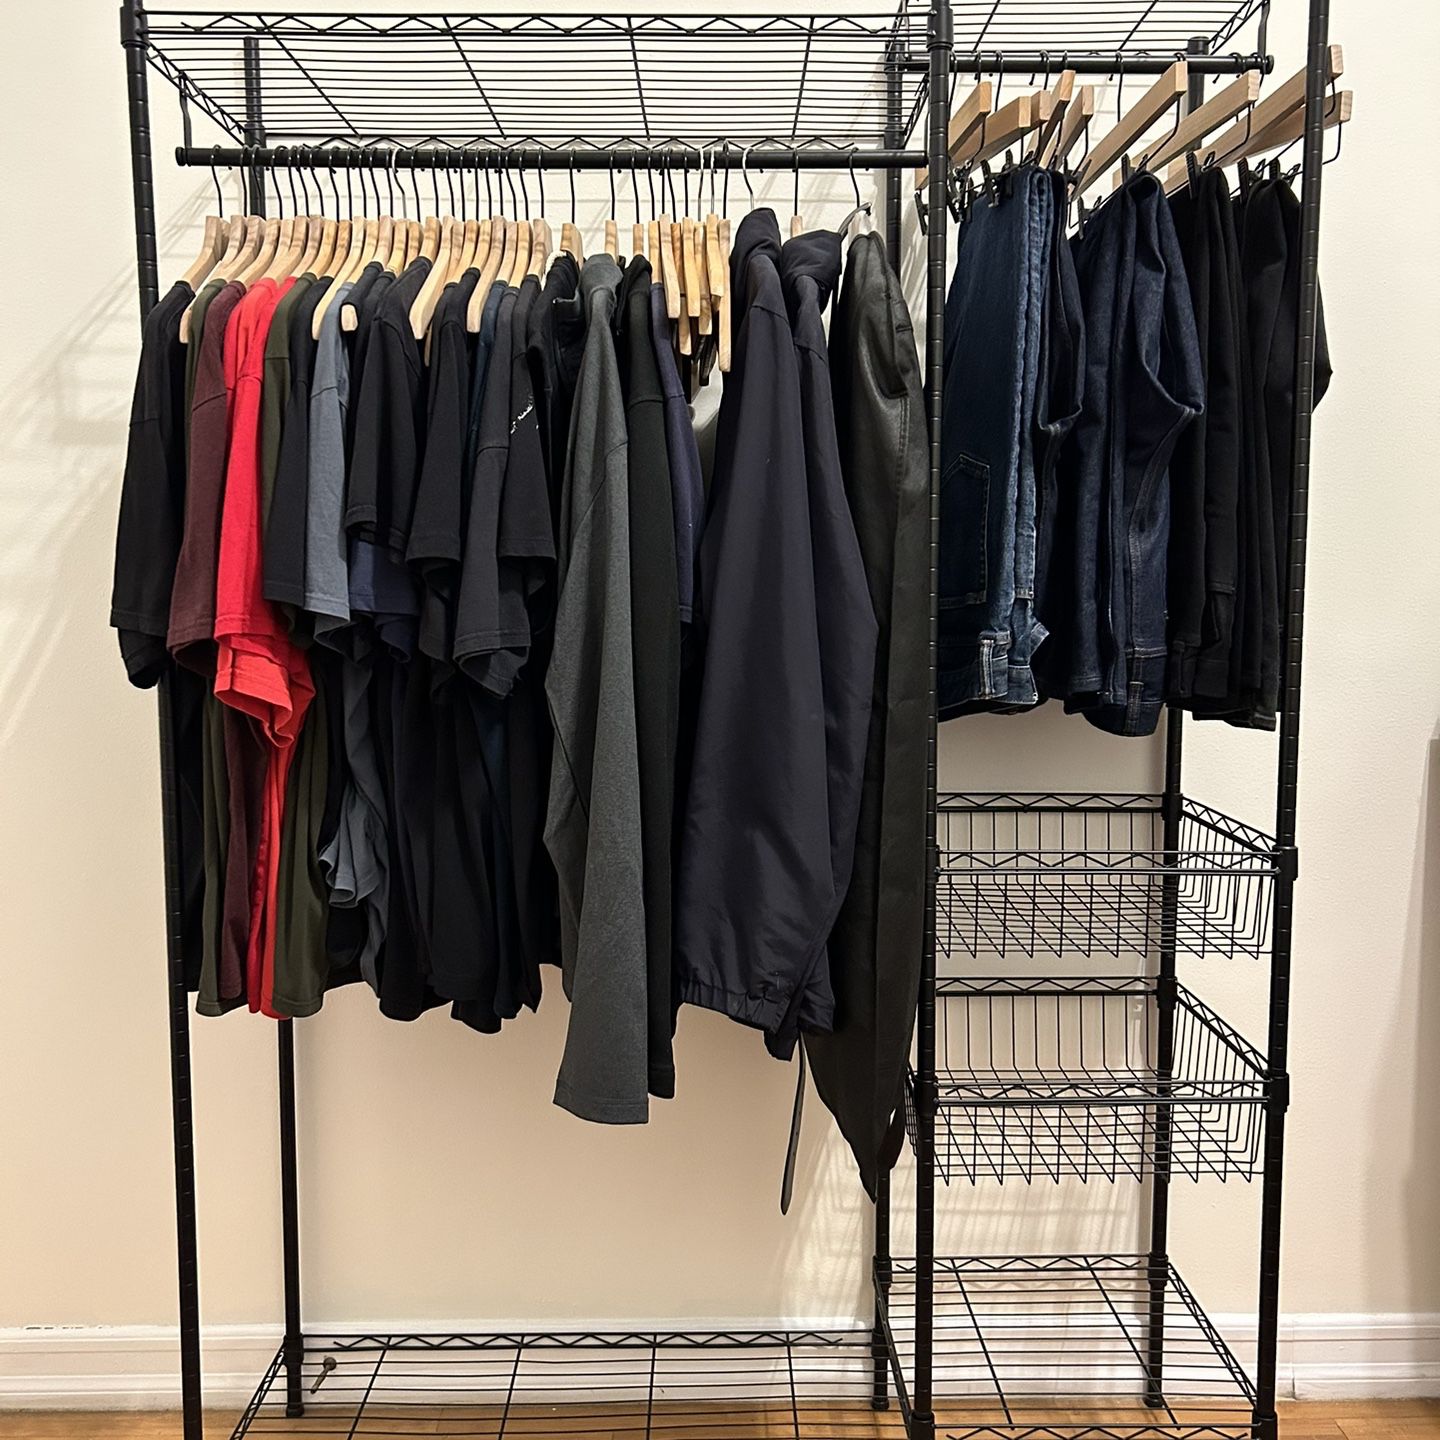 Xiofio 6 Tiers Heavy Duty Garment Rack,Clothing Storage Organizer